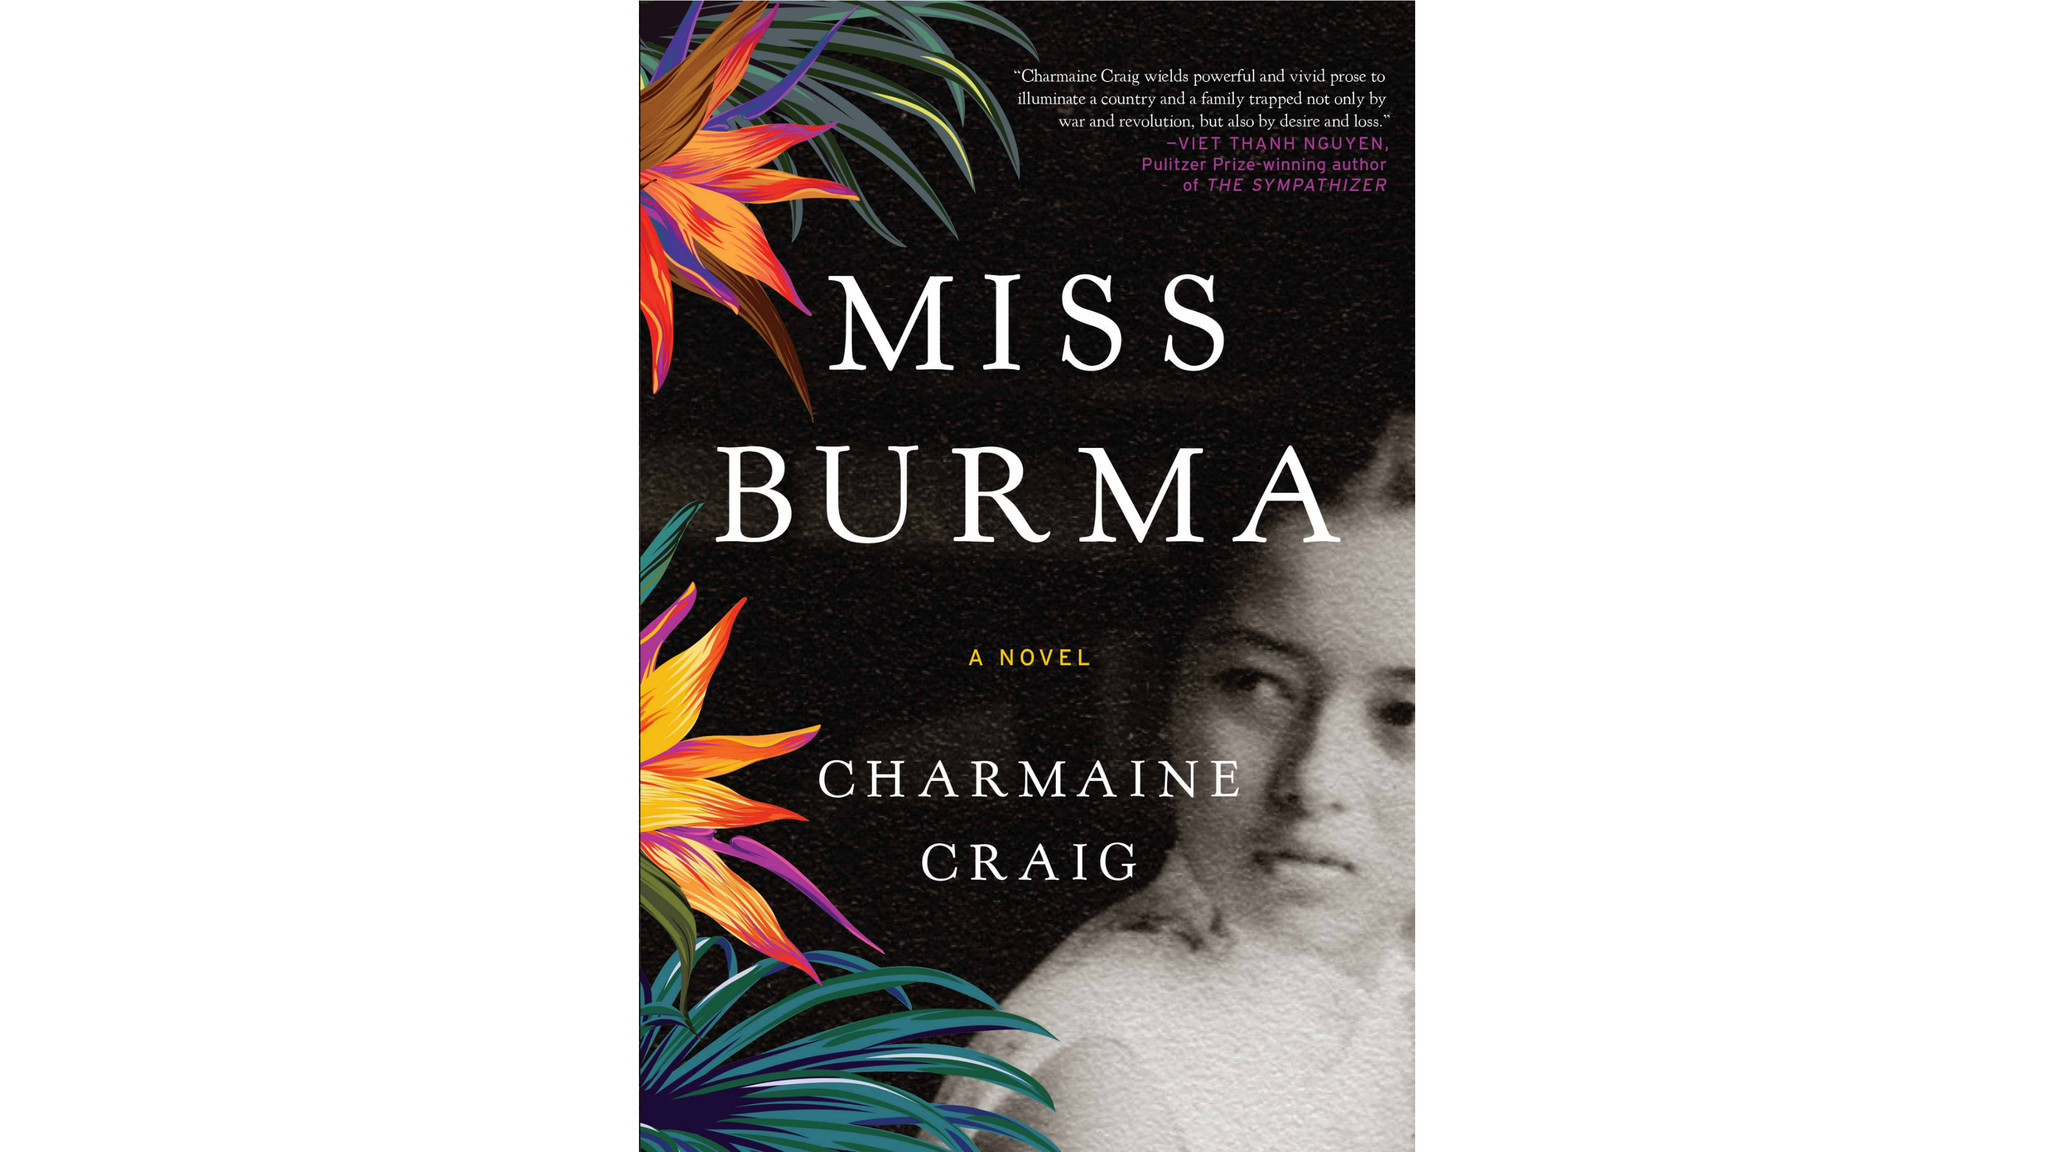 "Miss Burma" by Charmaine Craig.